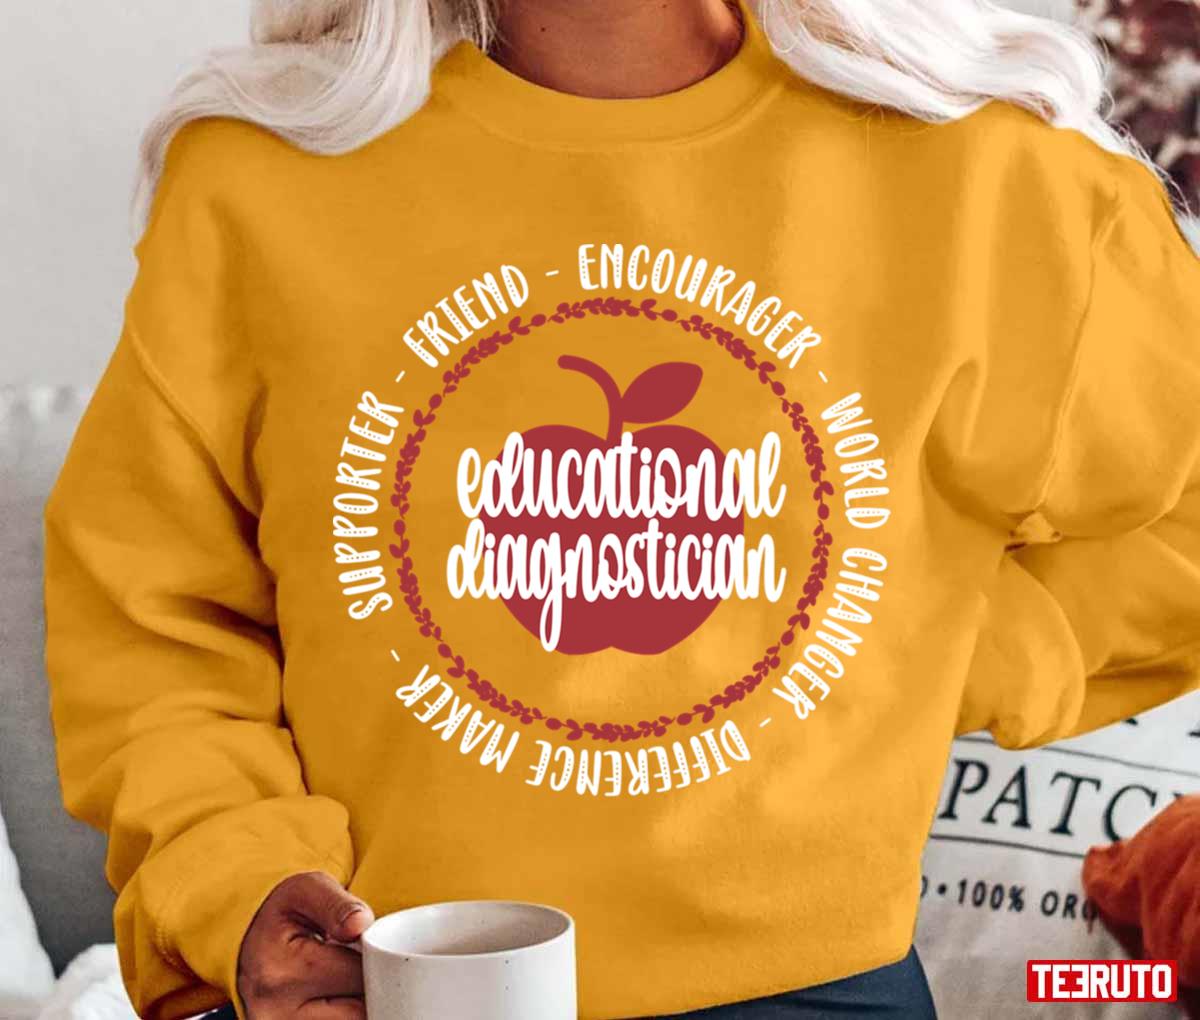 Educational Diagnostician Educational Diag Unisex T-Shirt